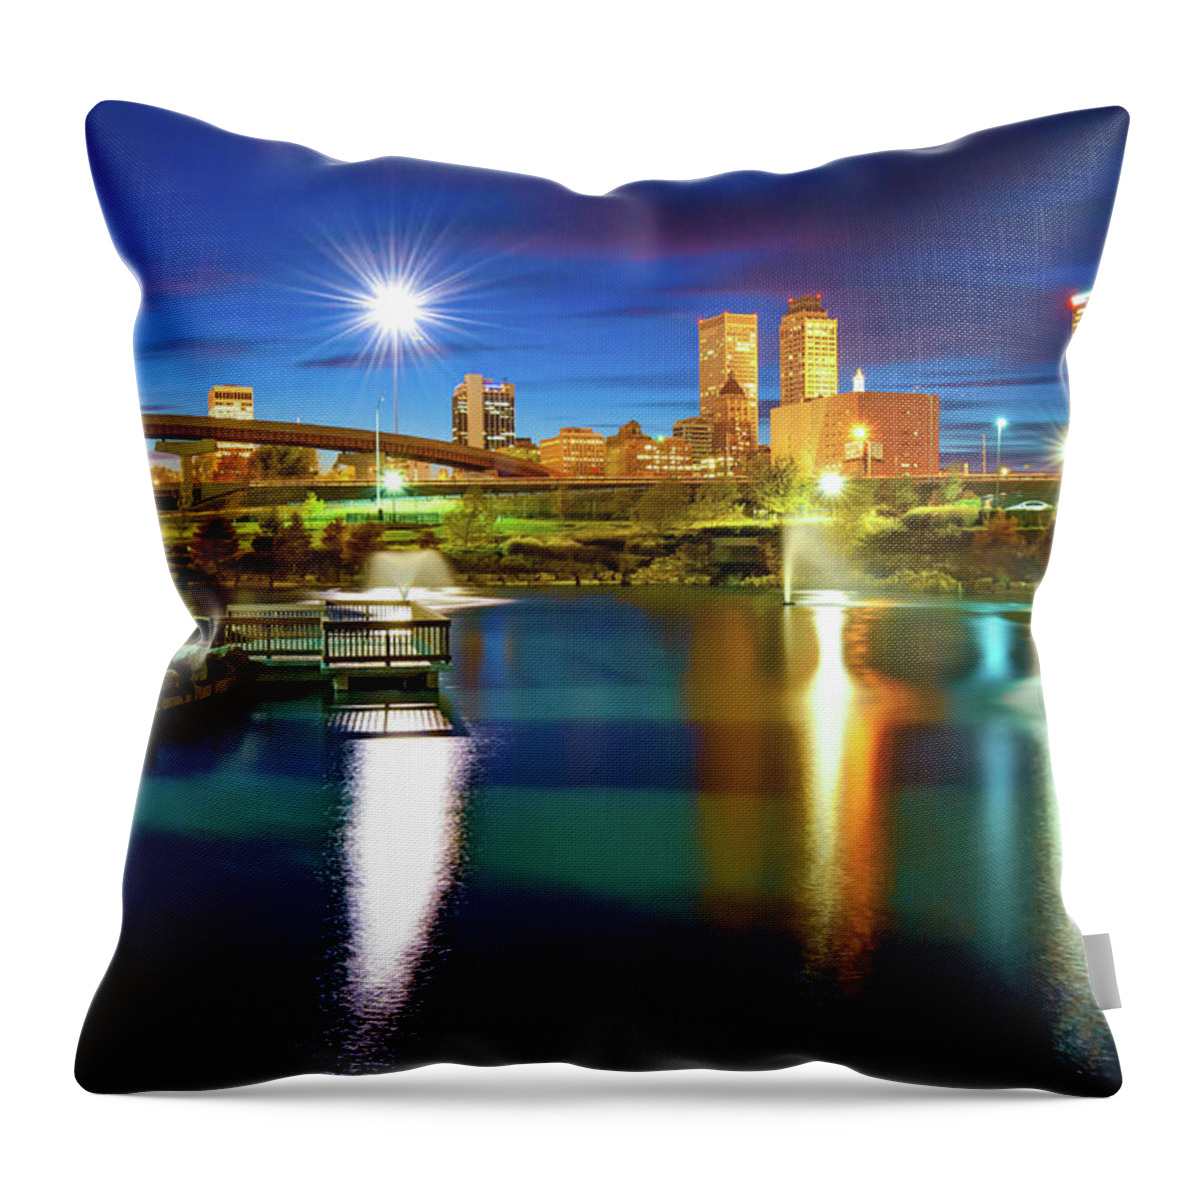 Tulsa Throw Pillow featuring the photograph Downtown Tulsa Oklahoma Skyline at Dusk by Gregory Ballos